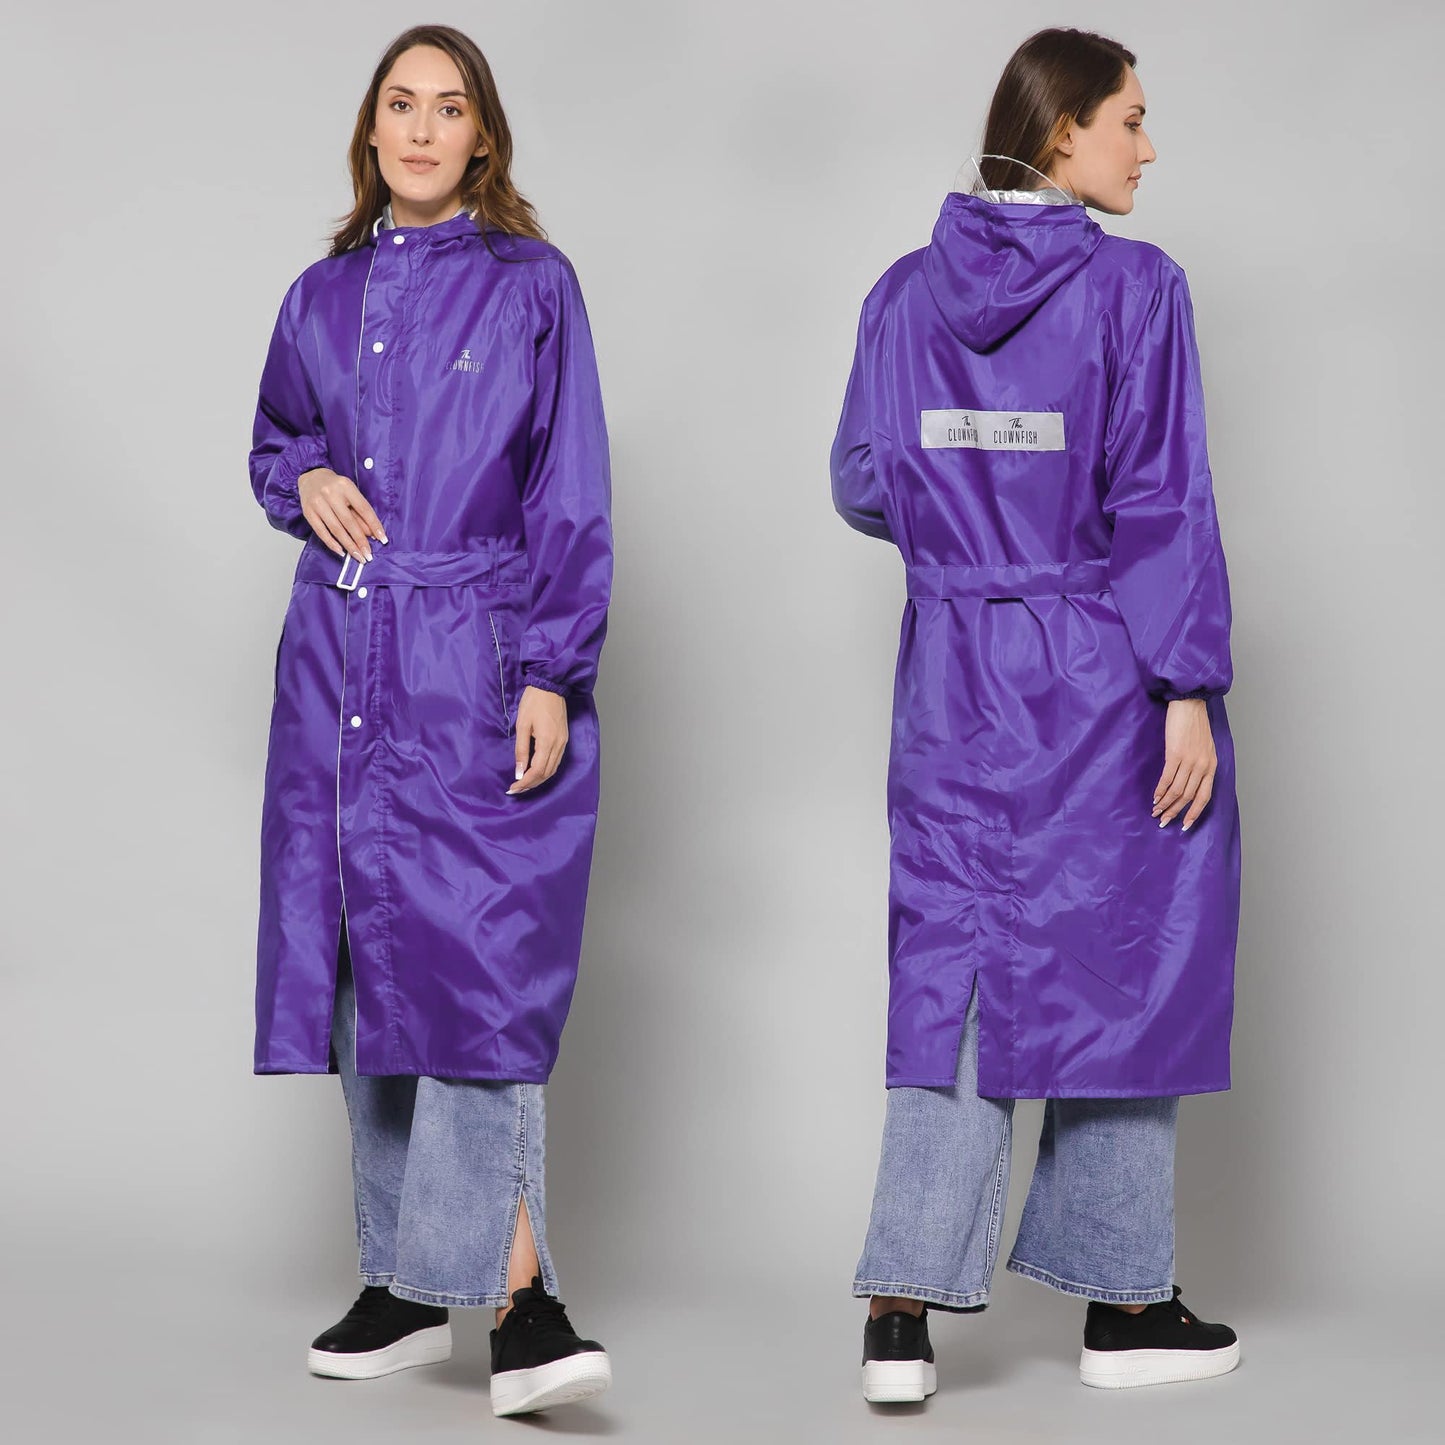 THE CLOWNFISH Raincoats for Women Rain Coat for Women Raincoat for Ladies Waterproof Reversible Double Layer. Drizzle Diva Series (Purple, X-Large)